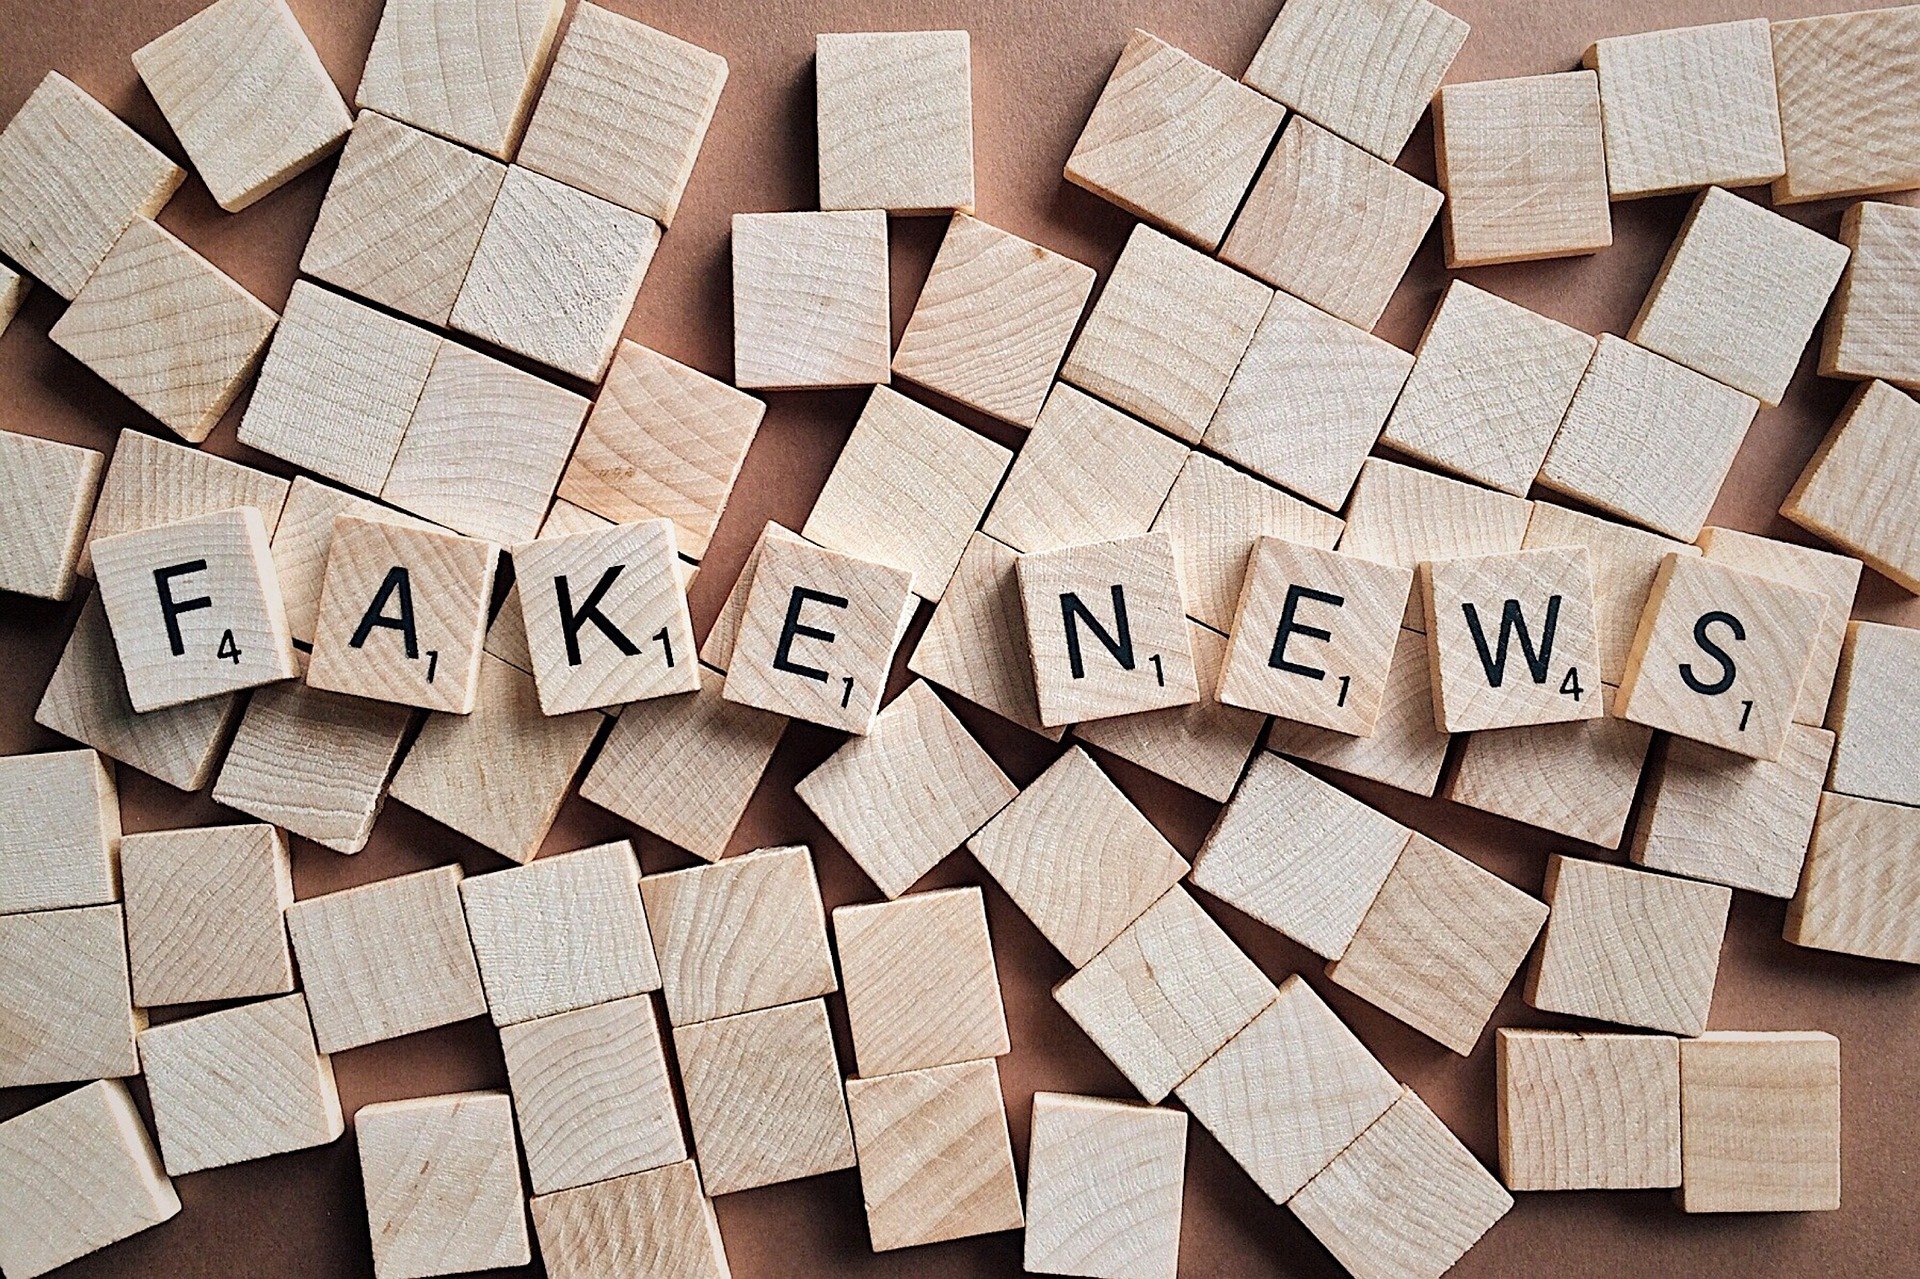 a set of scrabble tiles spelling "fake news"